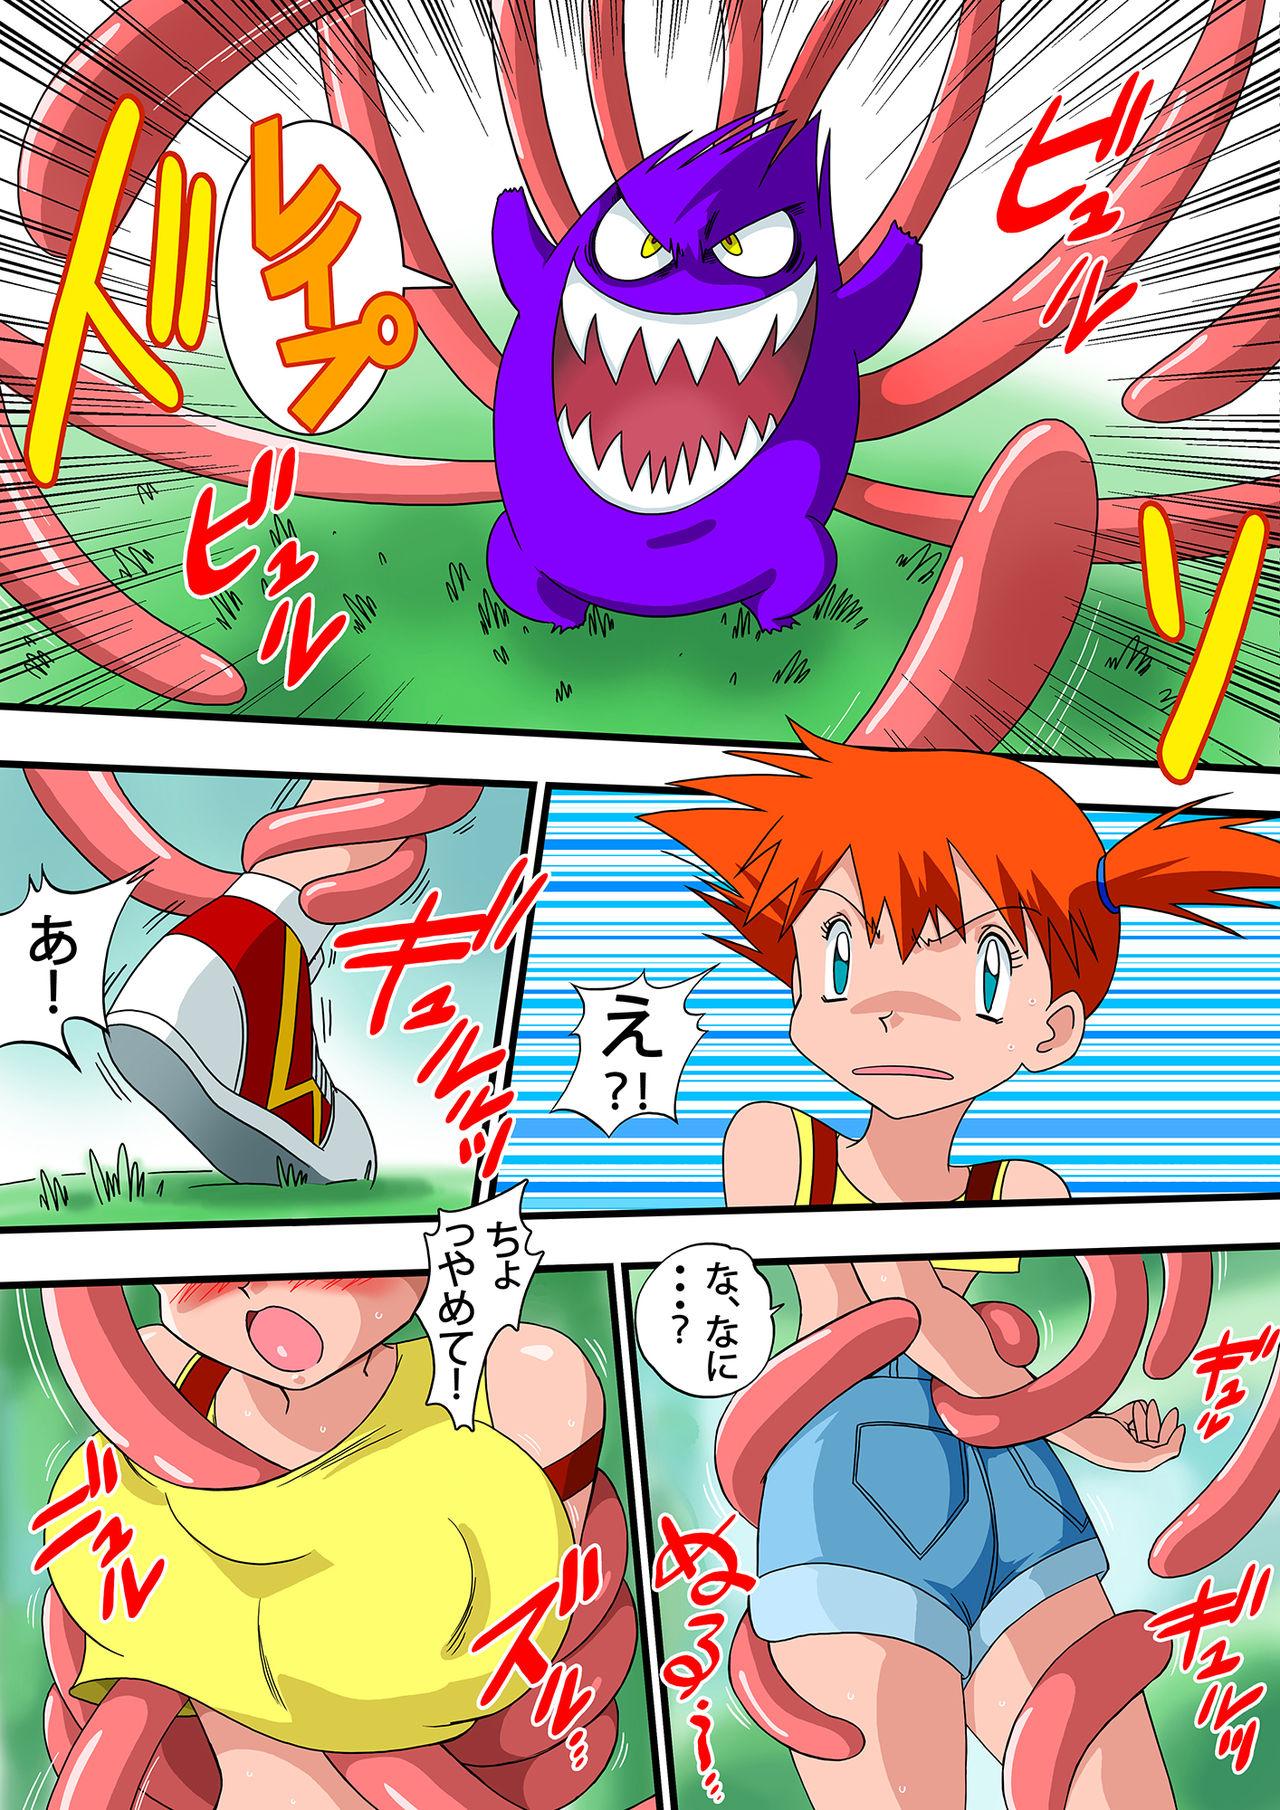 Vergon PokePoke - Pokemon Exhibition - Page 4